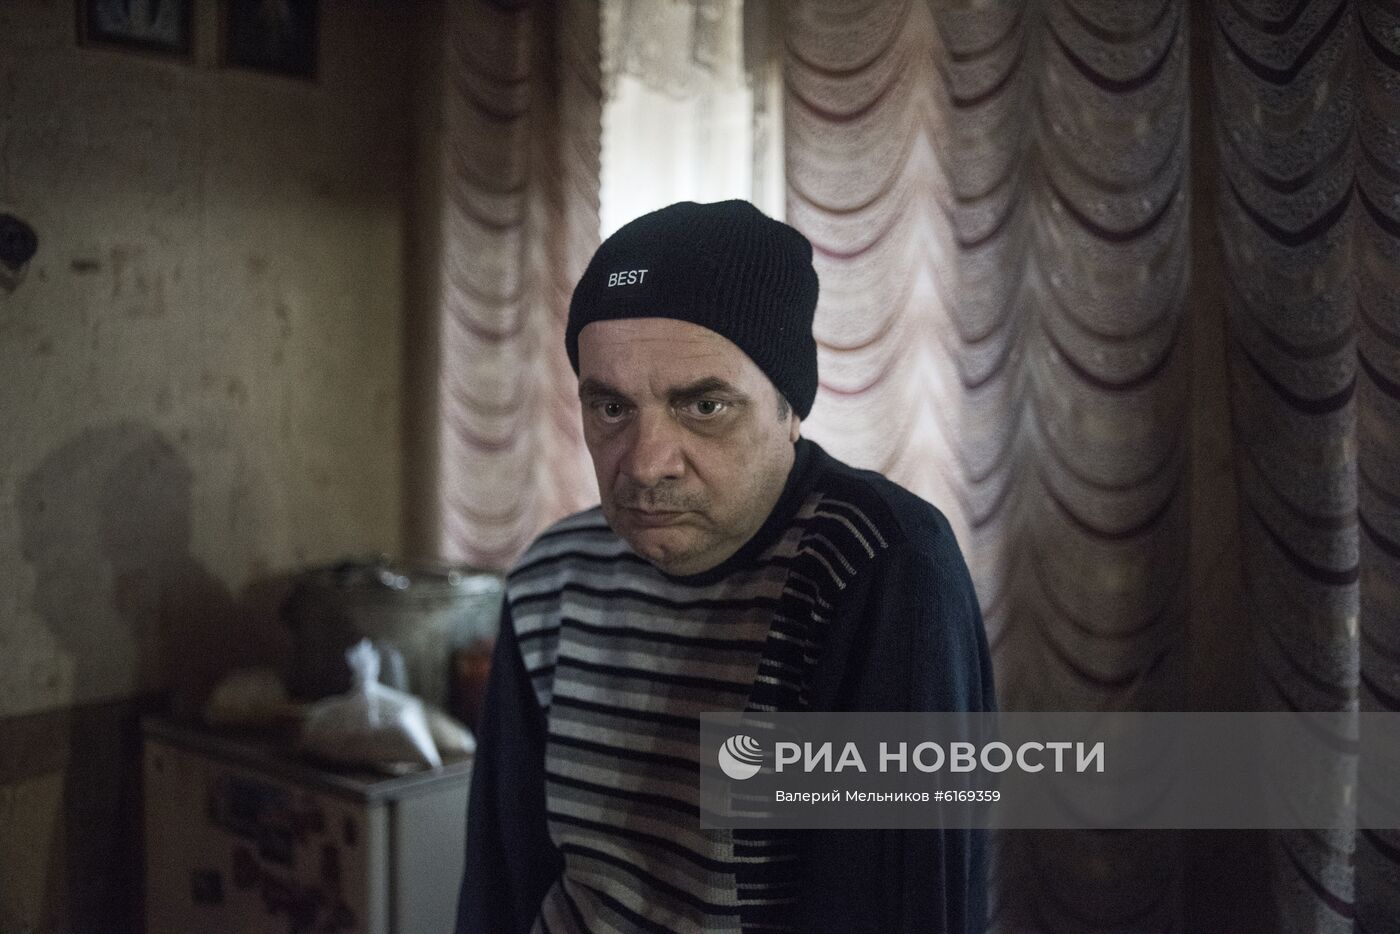 Валерий Мельников. Picture of the Year (POY)